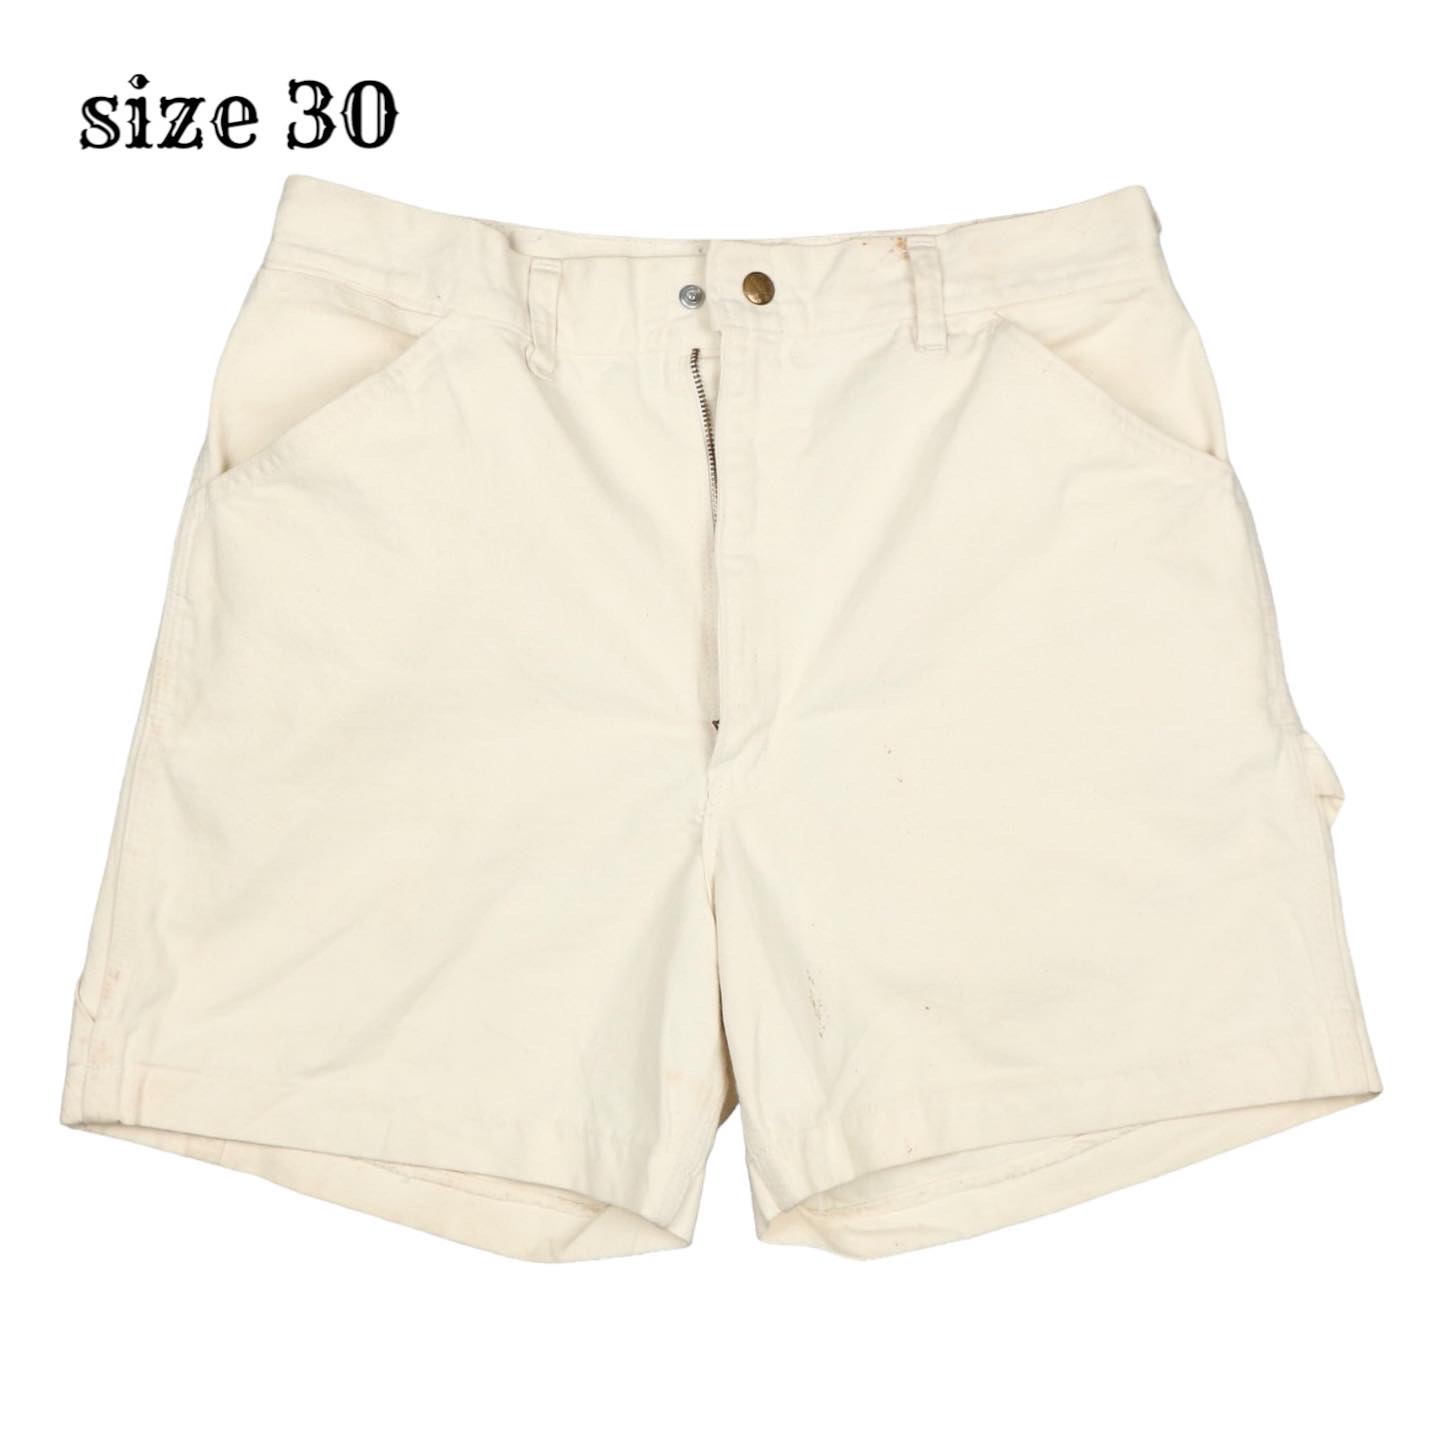 1989 Carhartt 100 Years White Shorts Size 30